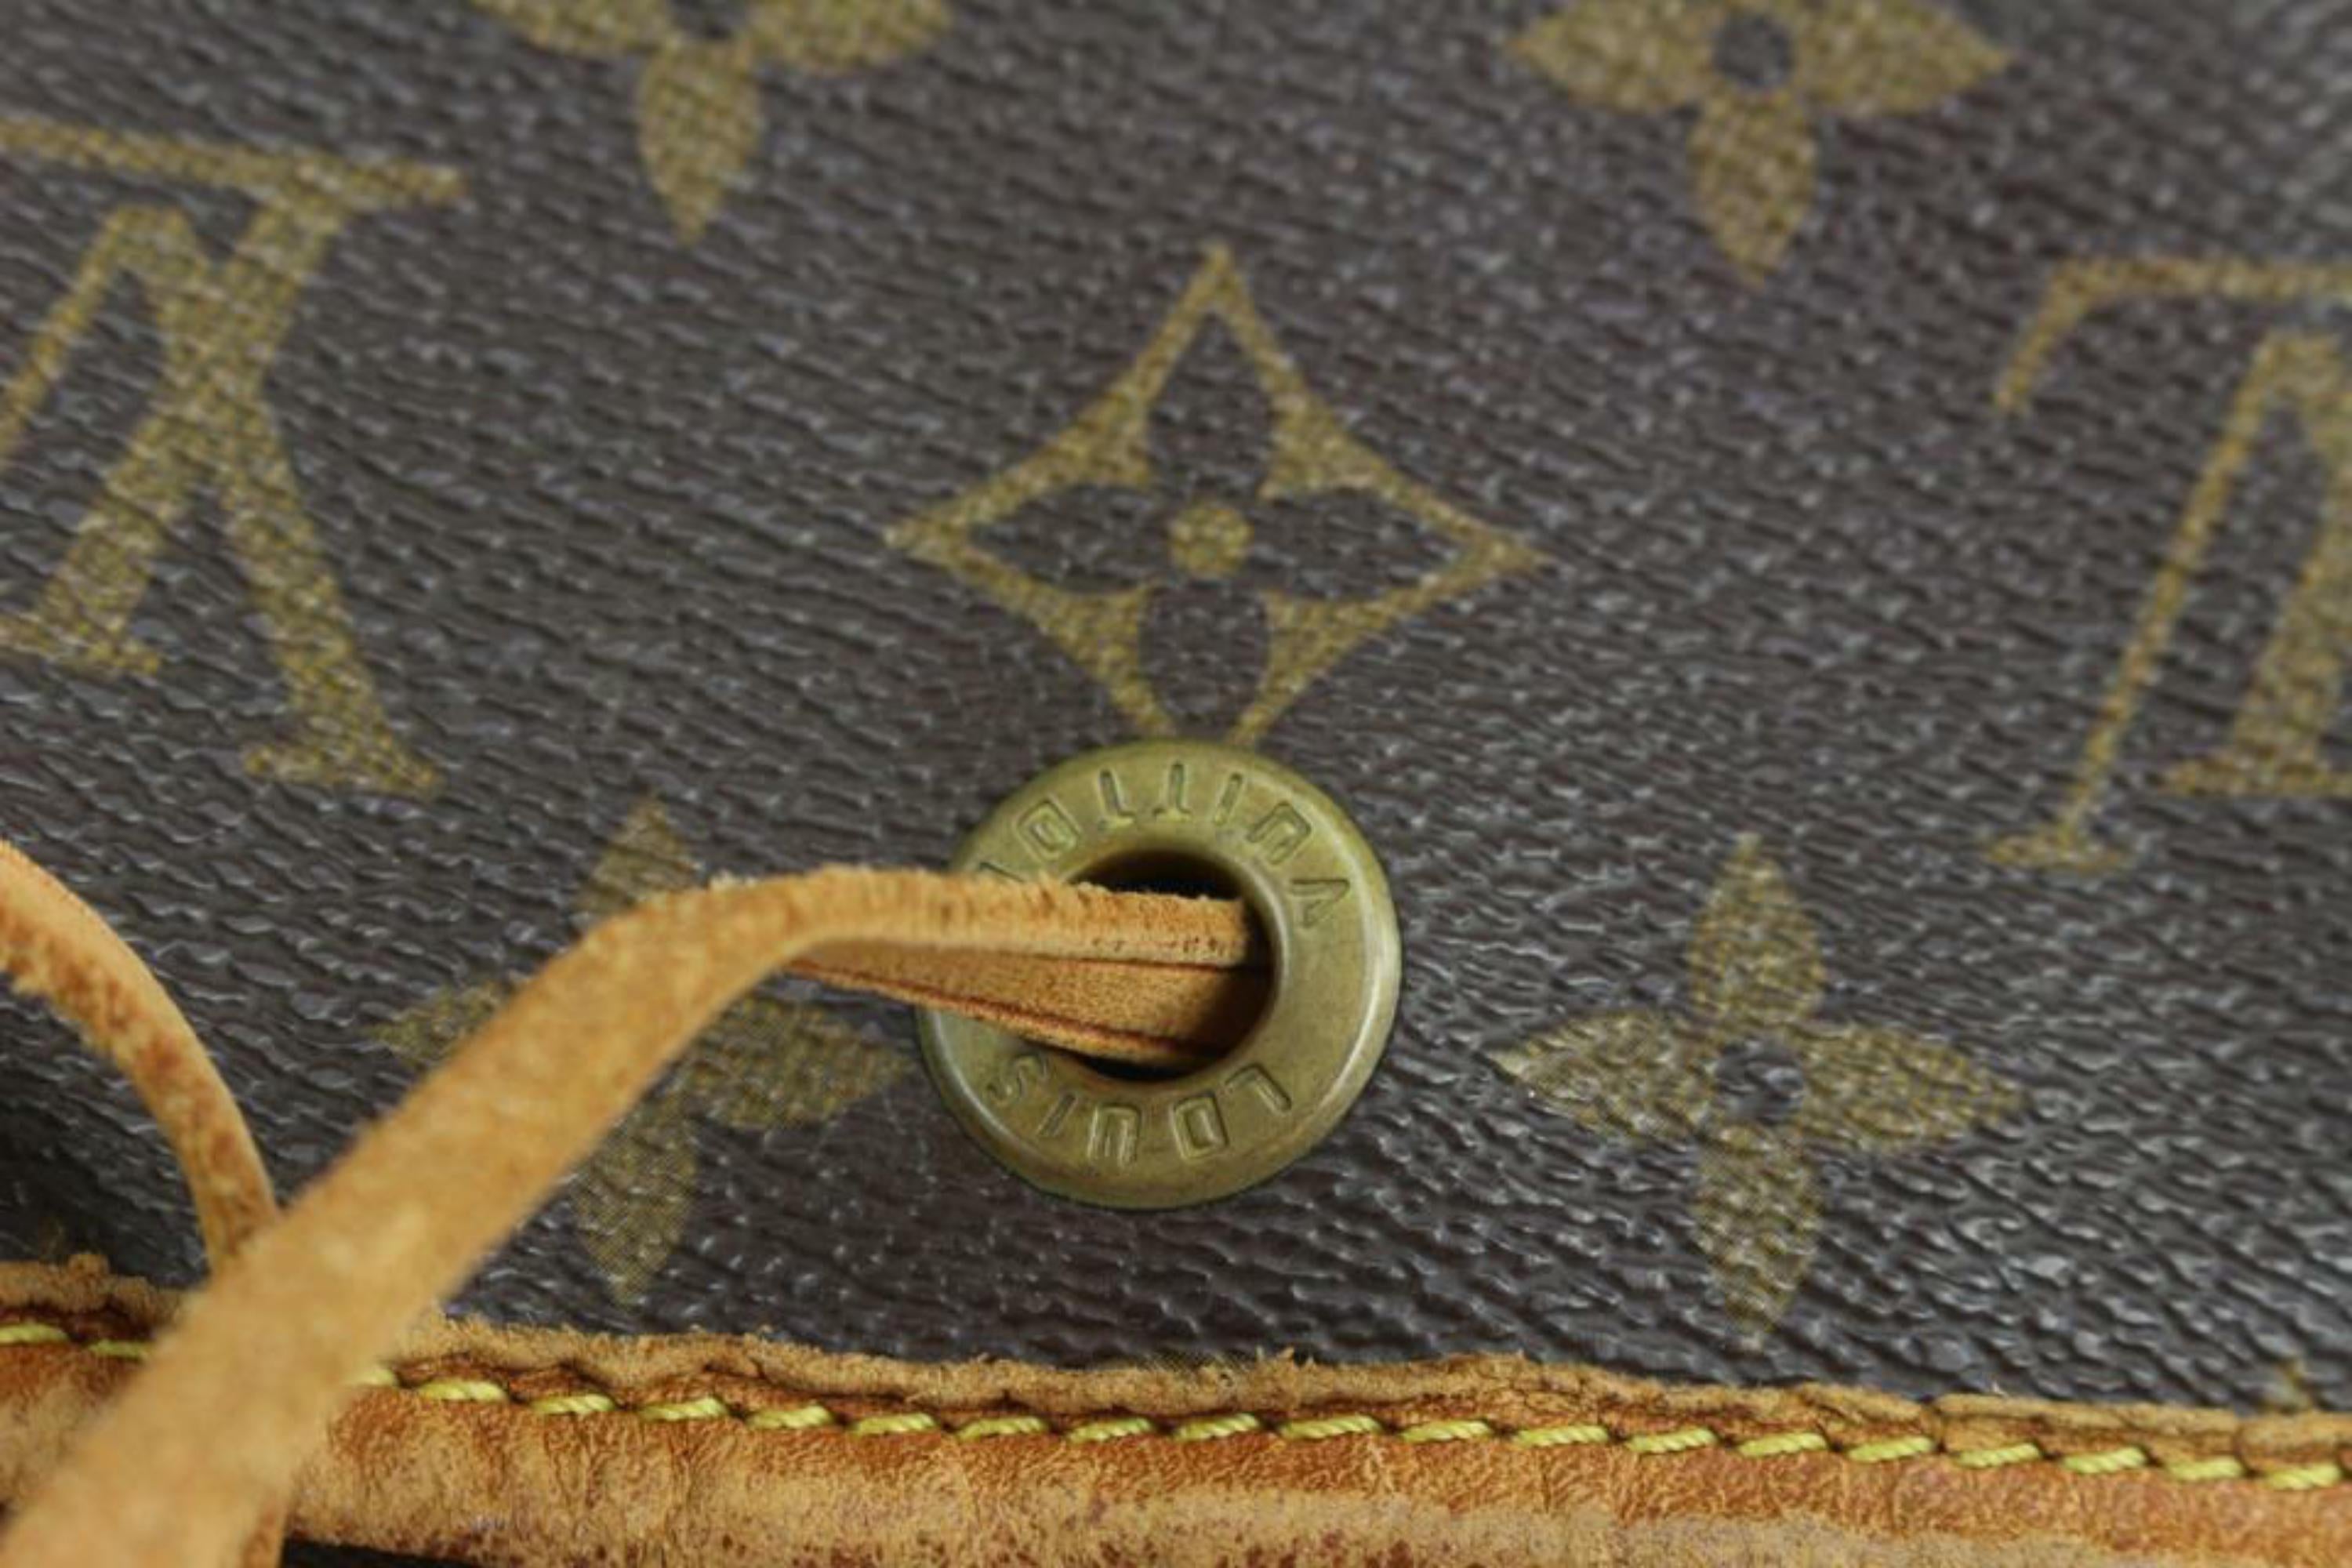 Louis Vuitton Monogram Petit Noe Drawstring Bucket Hobo Bag 41L26a